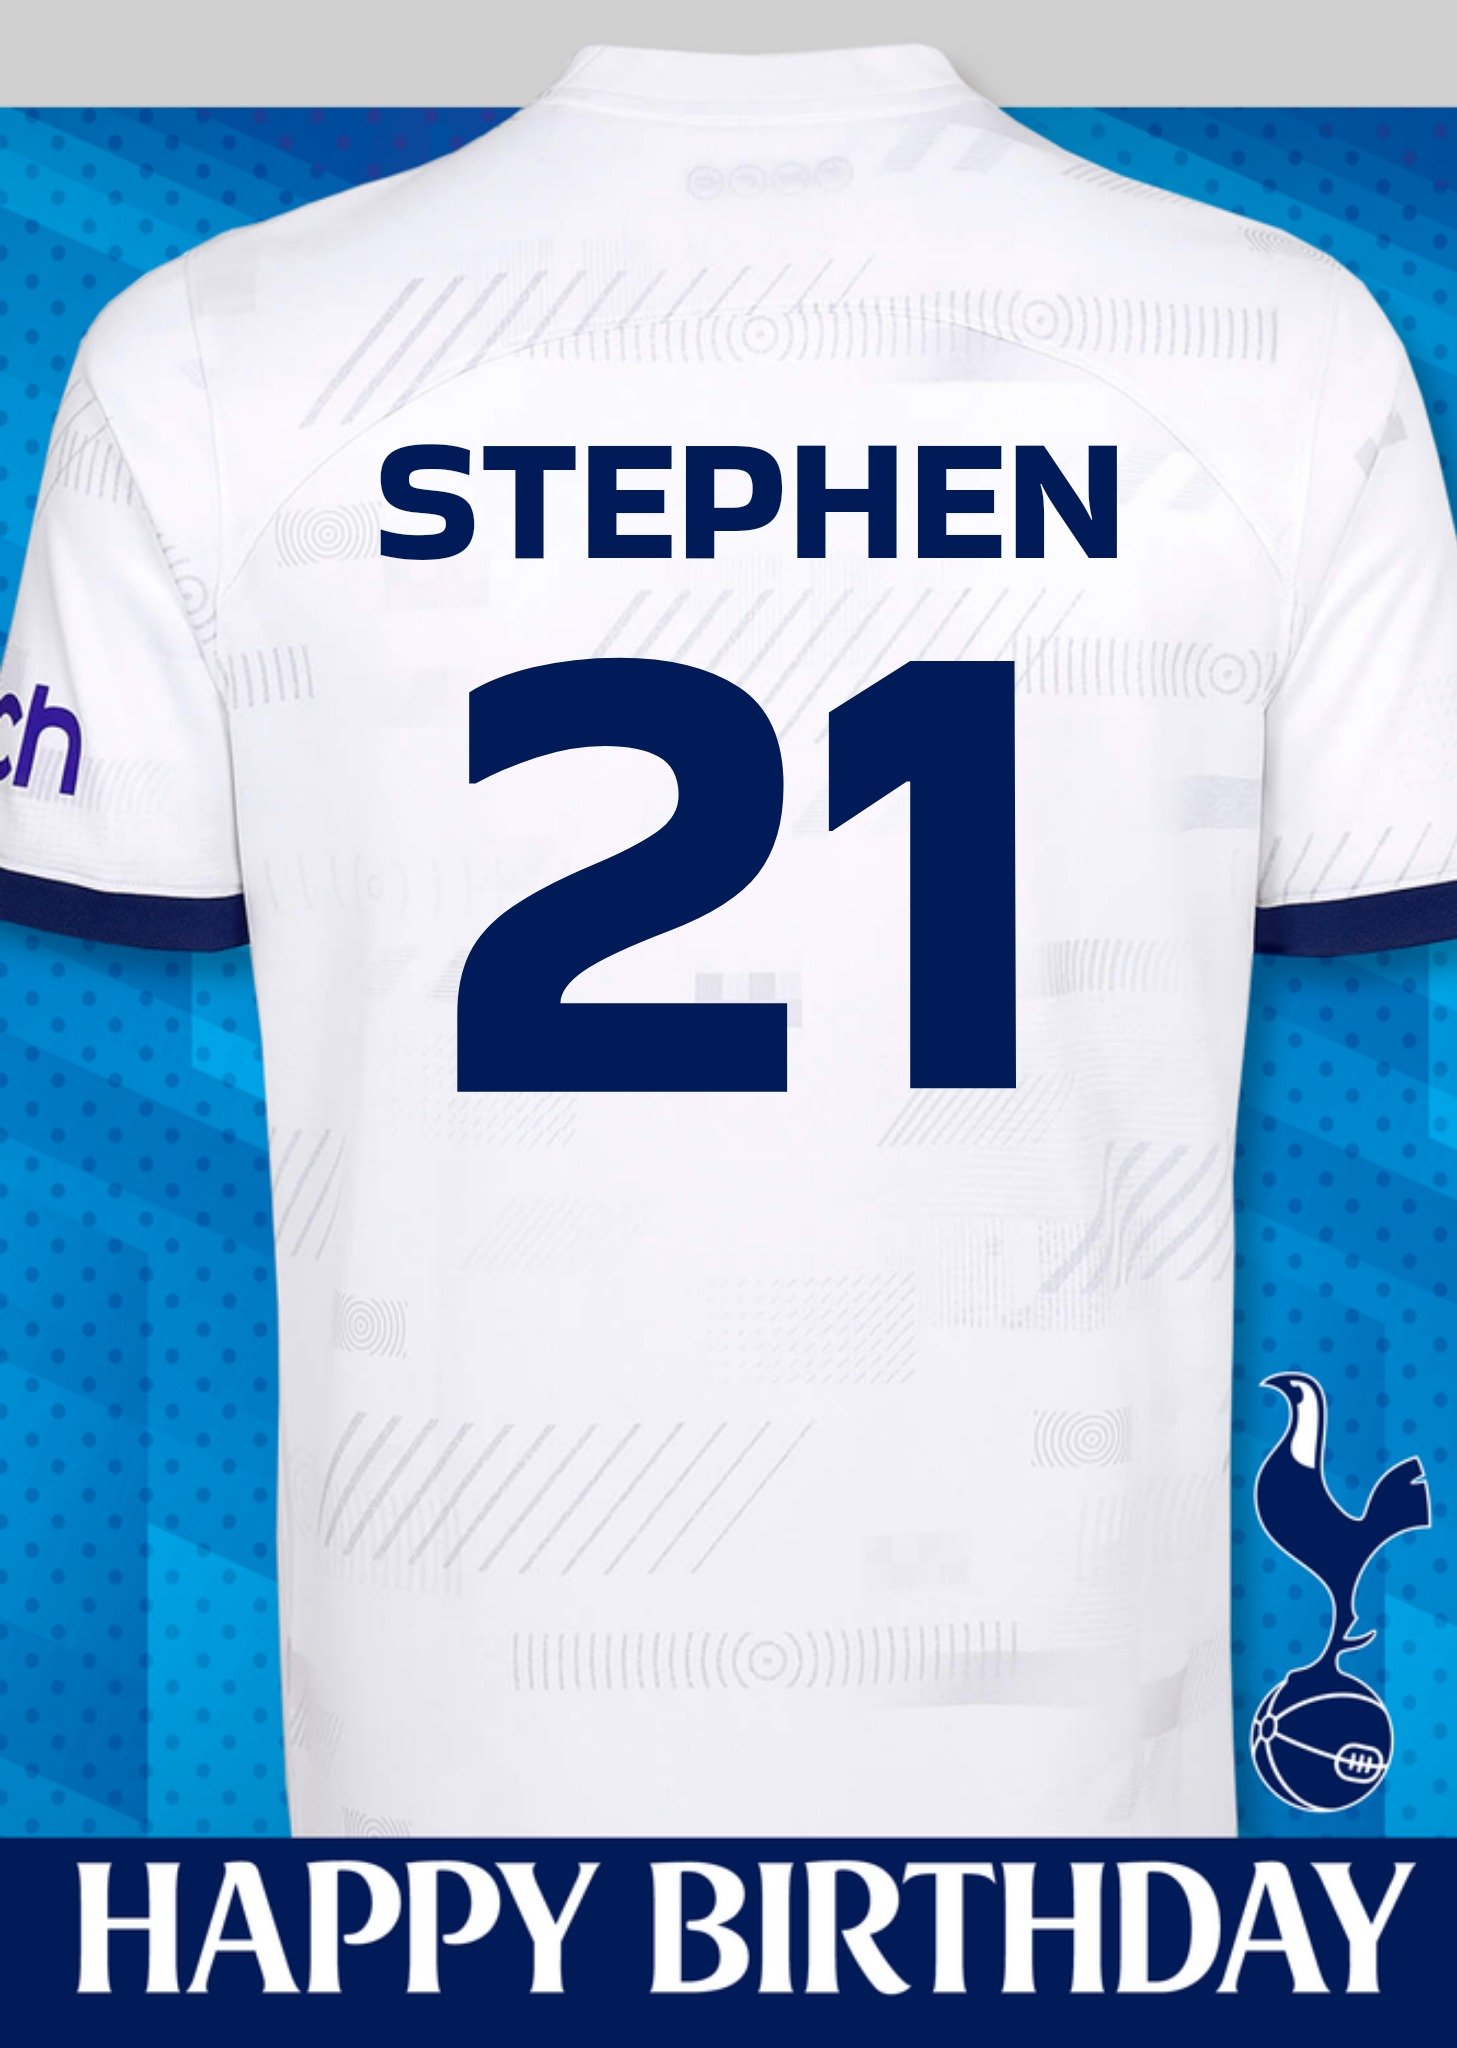 Tottenham Hotspur F.C - Verjaardagskaart - Voetbal shirt - Met naam